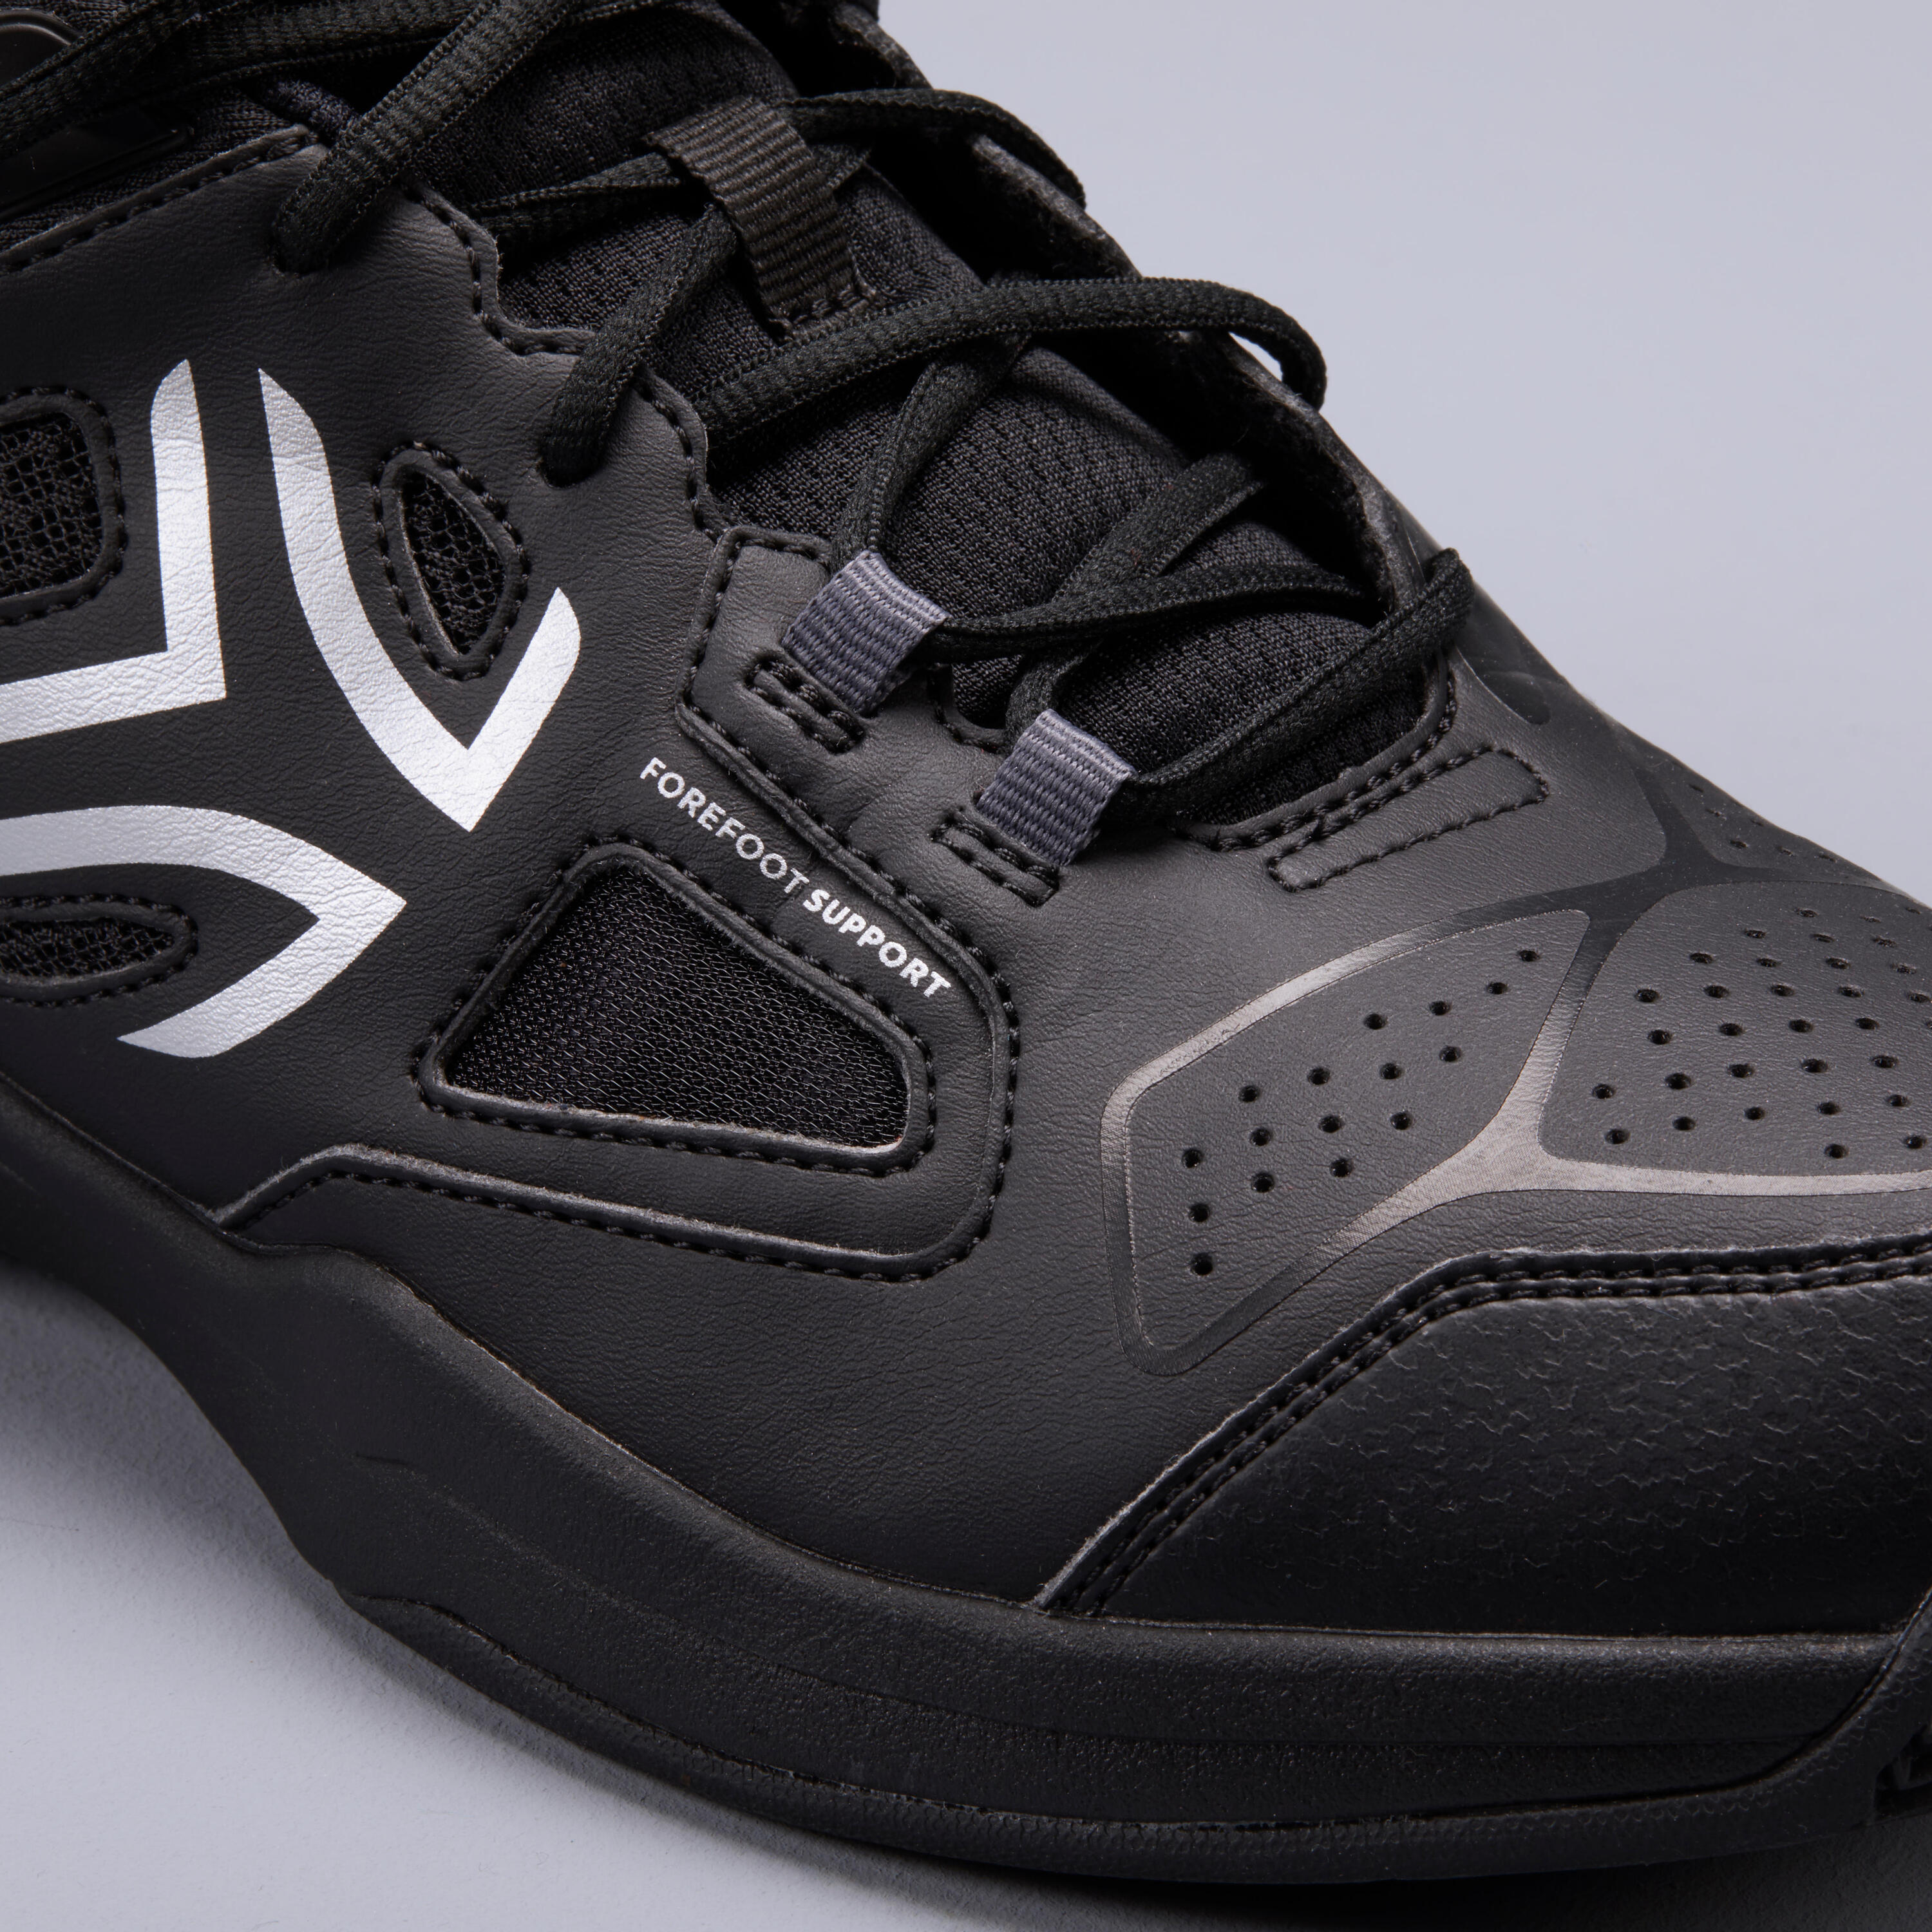 Men's Clay Court Tennis Shoes TS 500 - Black/Grey 8/8